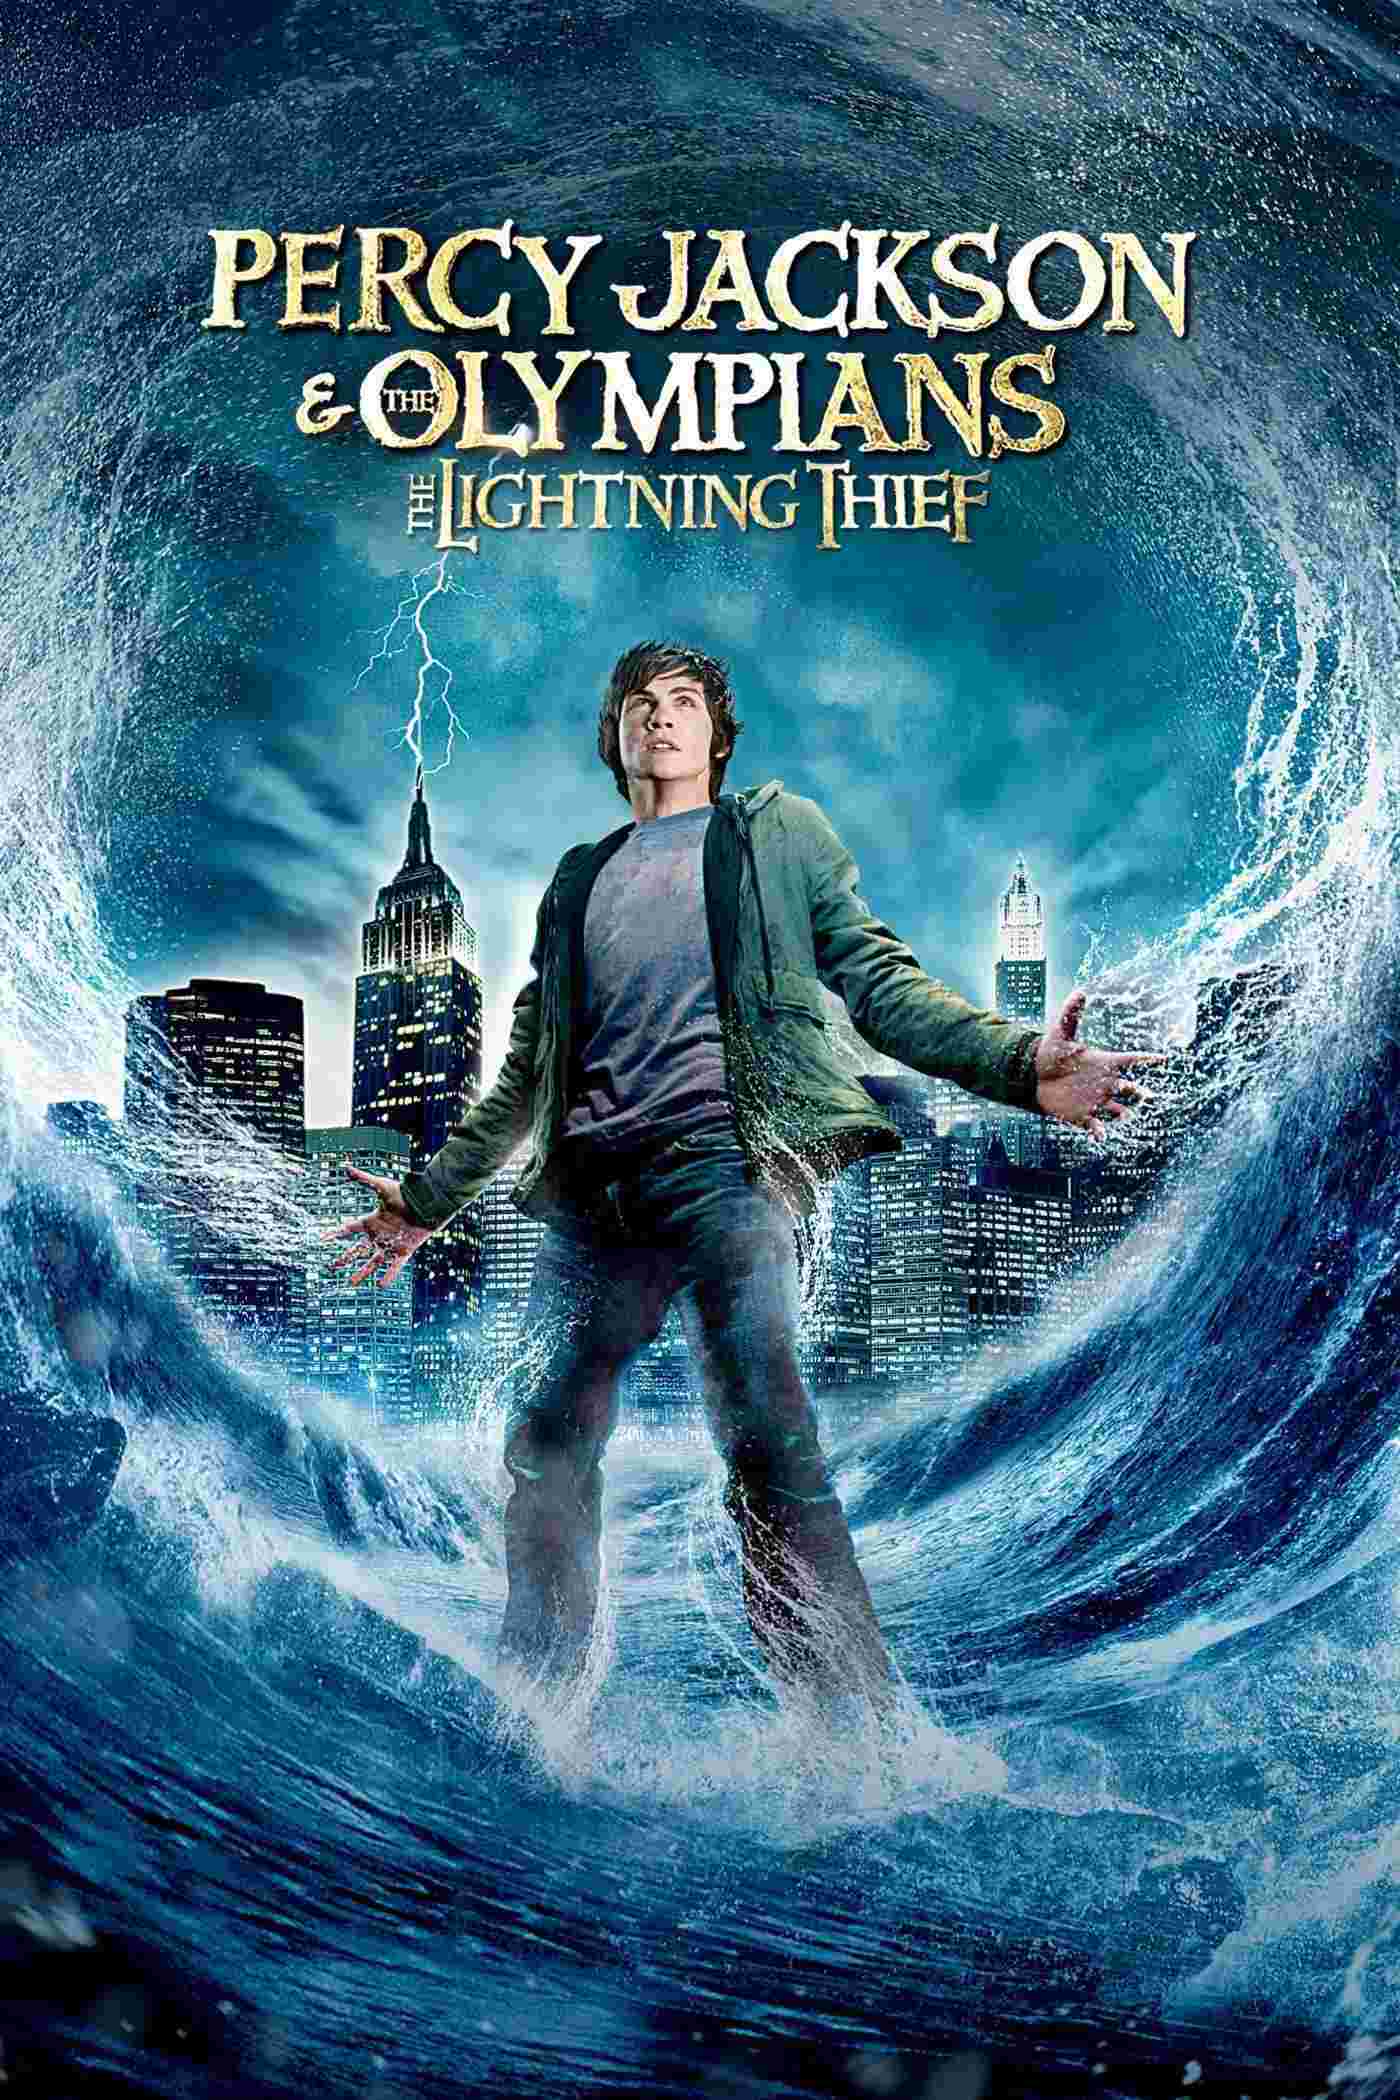 Percy Jackson & the Olympians: The Lightning Thief (2010) Logan Lerman